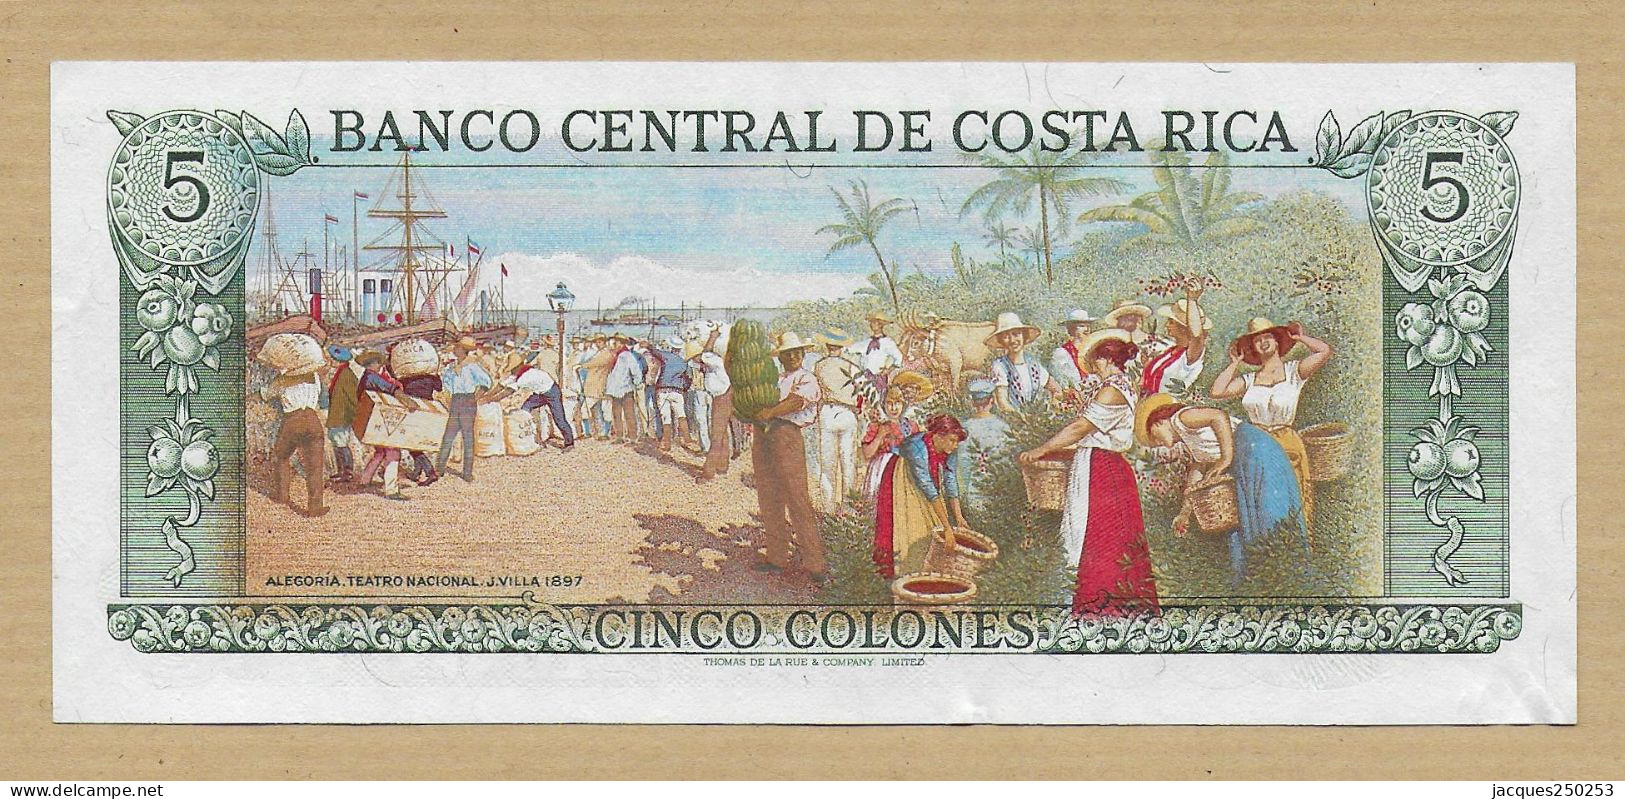 5 COLONES 4 OCTOBRE 1989 - Costa Rica